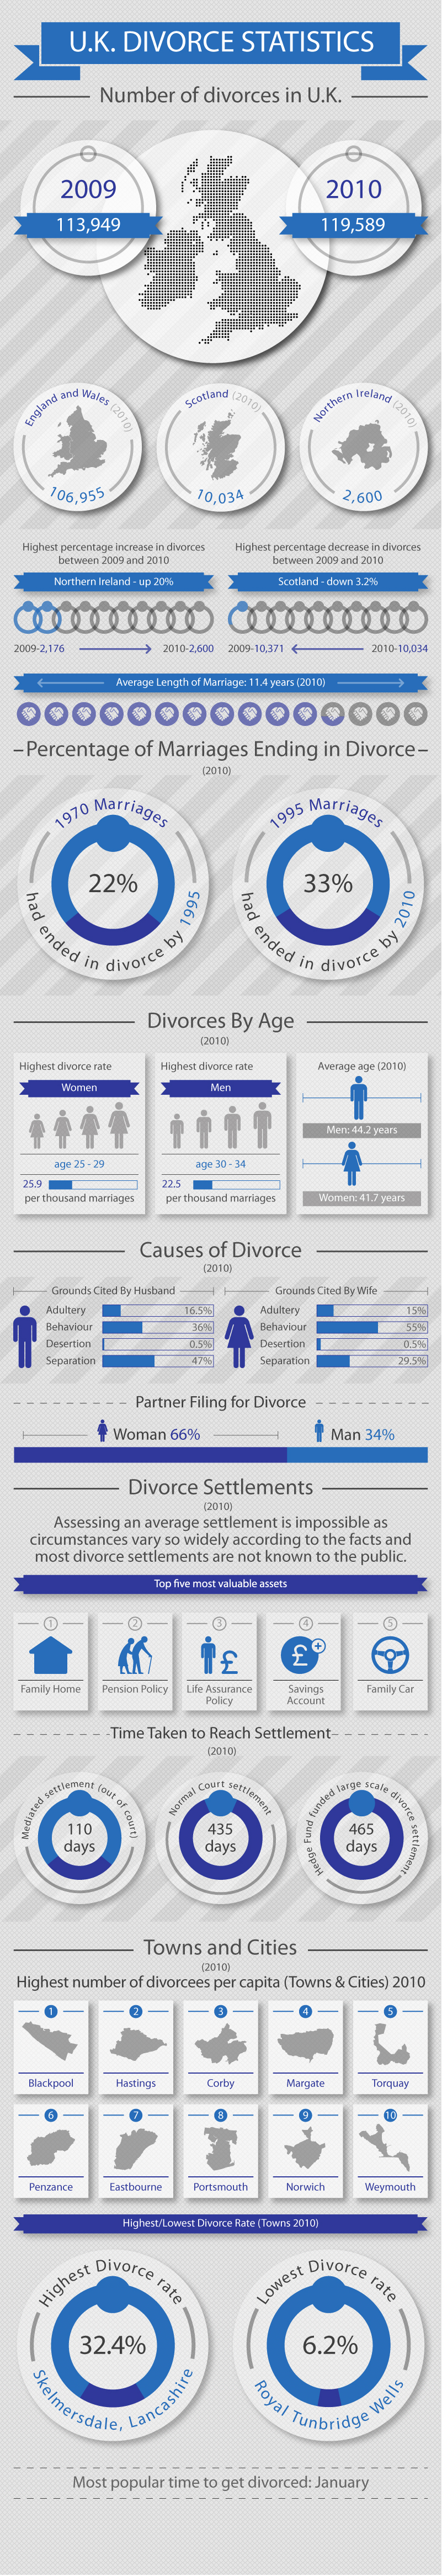 UK Divorce Statistics